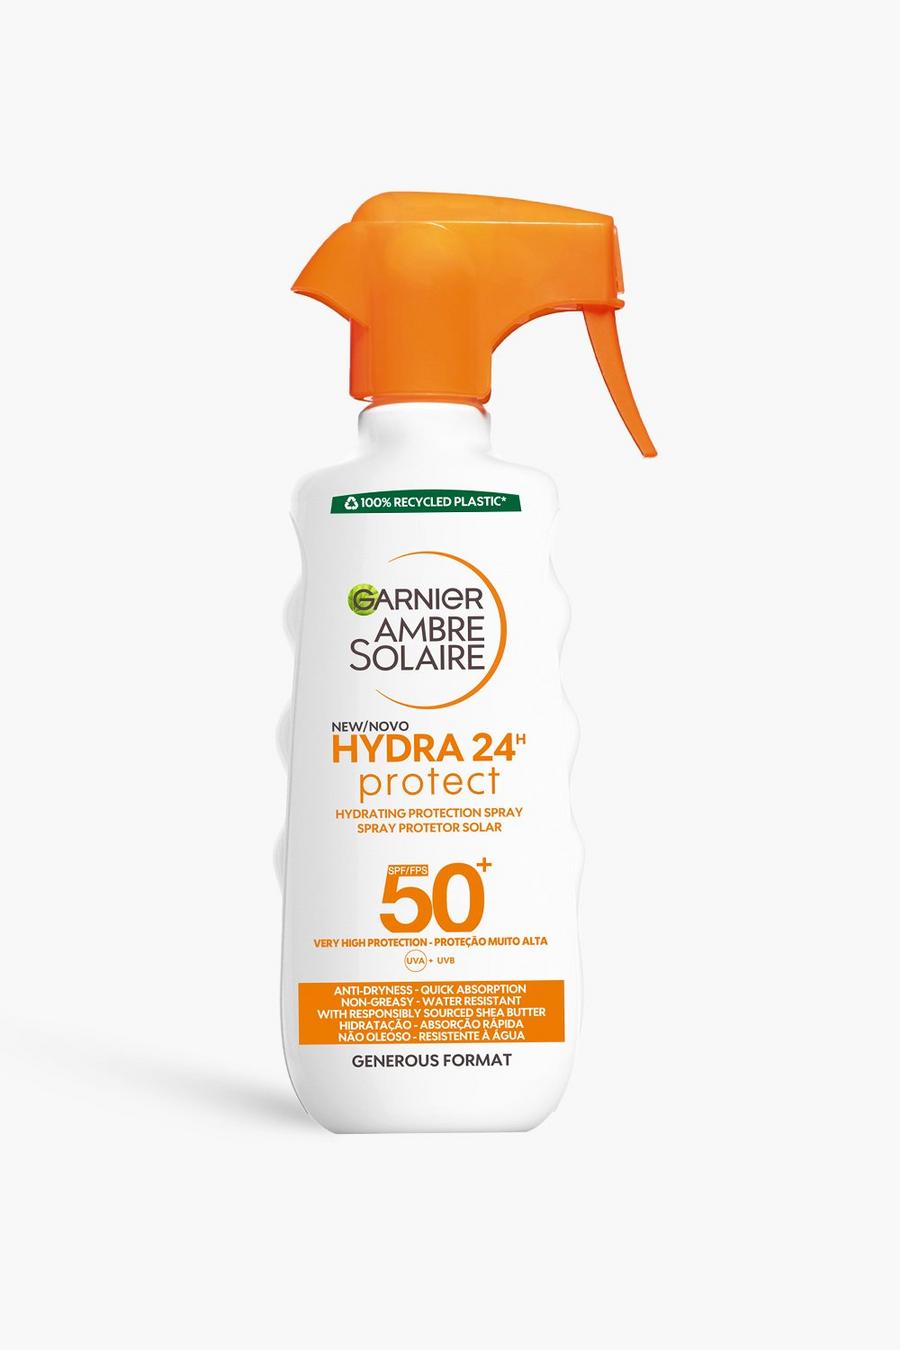 Garnier - Ambre solaire spray hydratant protection 24h SPF 50 - 300ml, White blanc